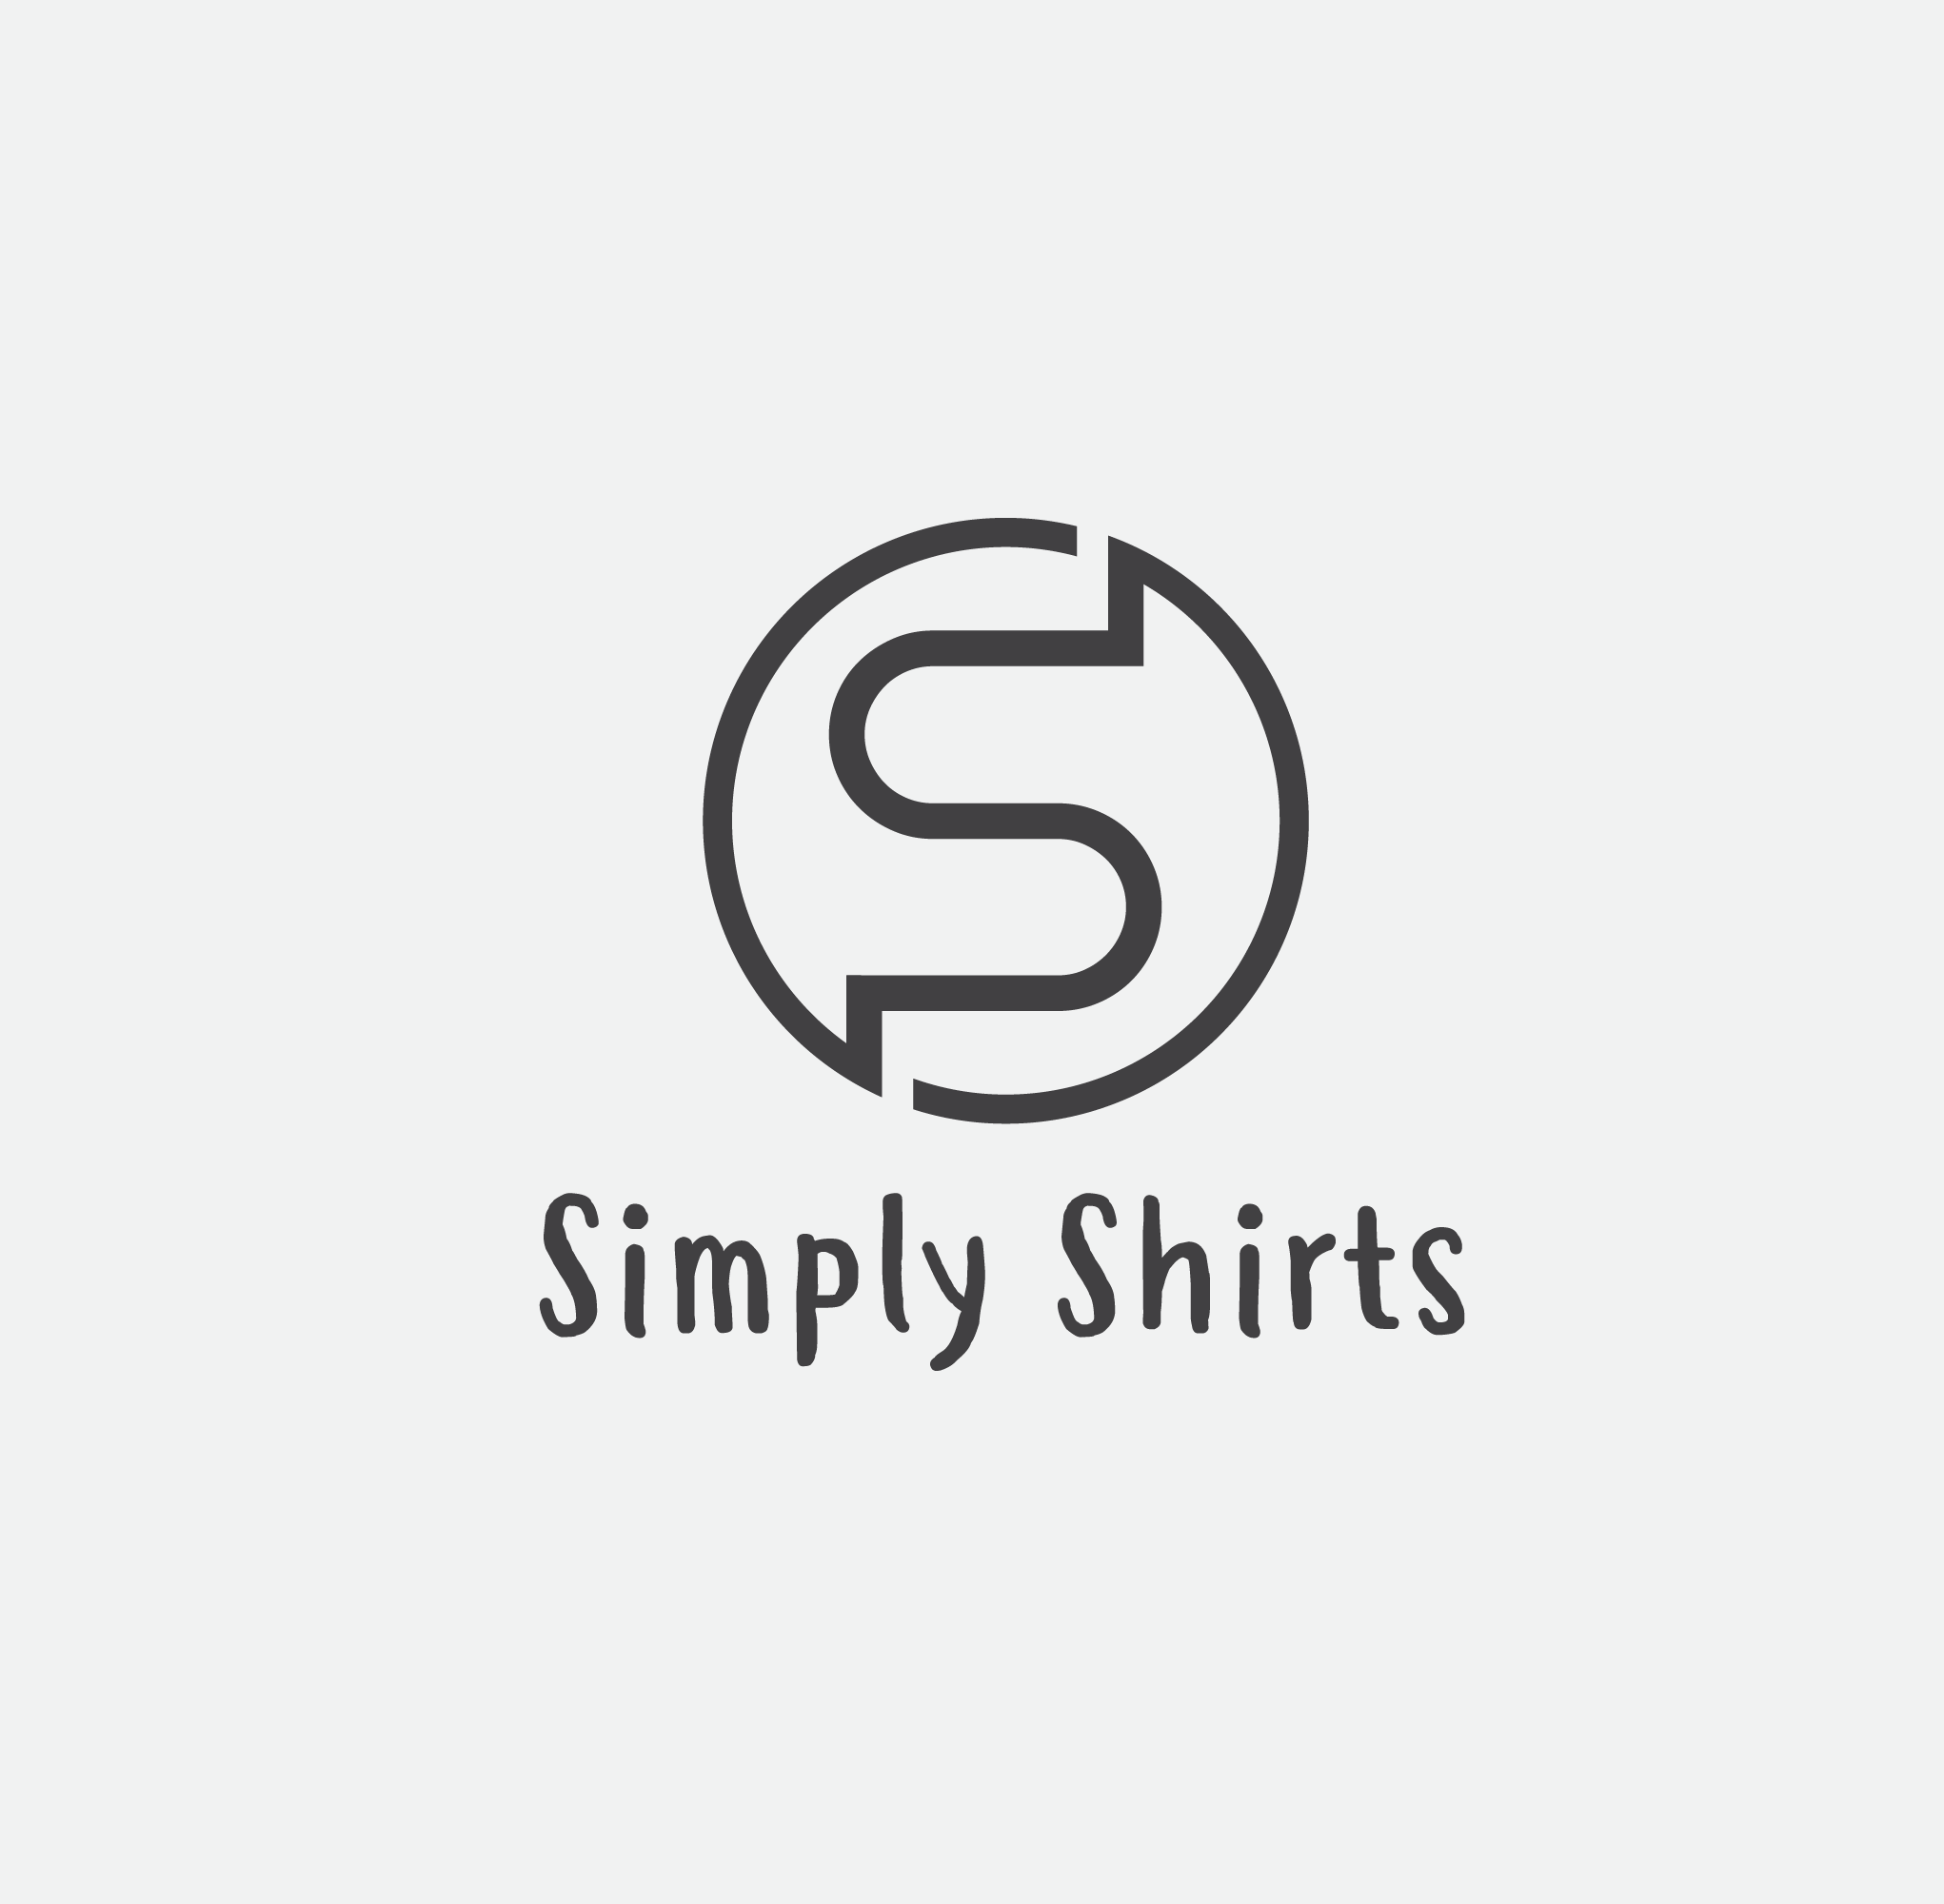 Simply Shirts ApS